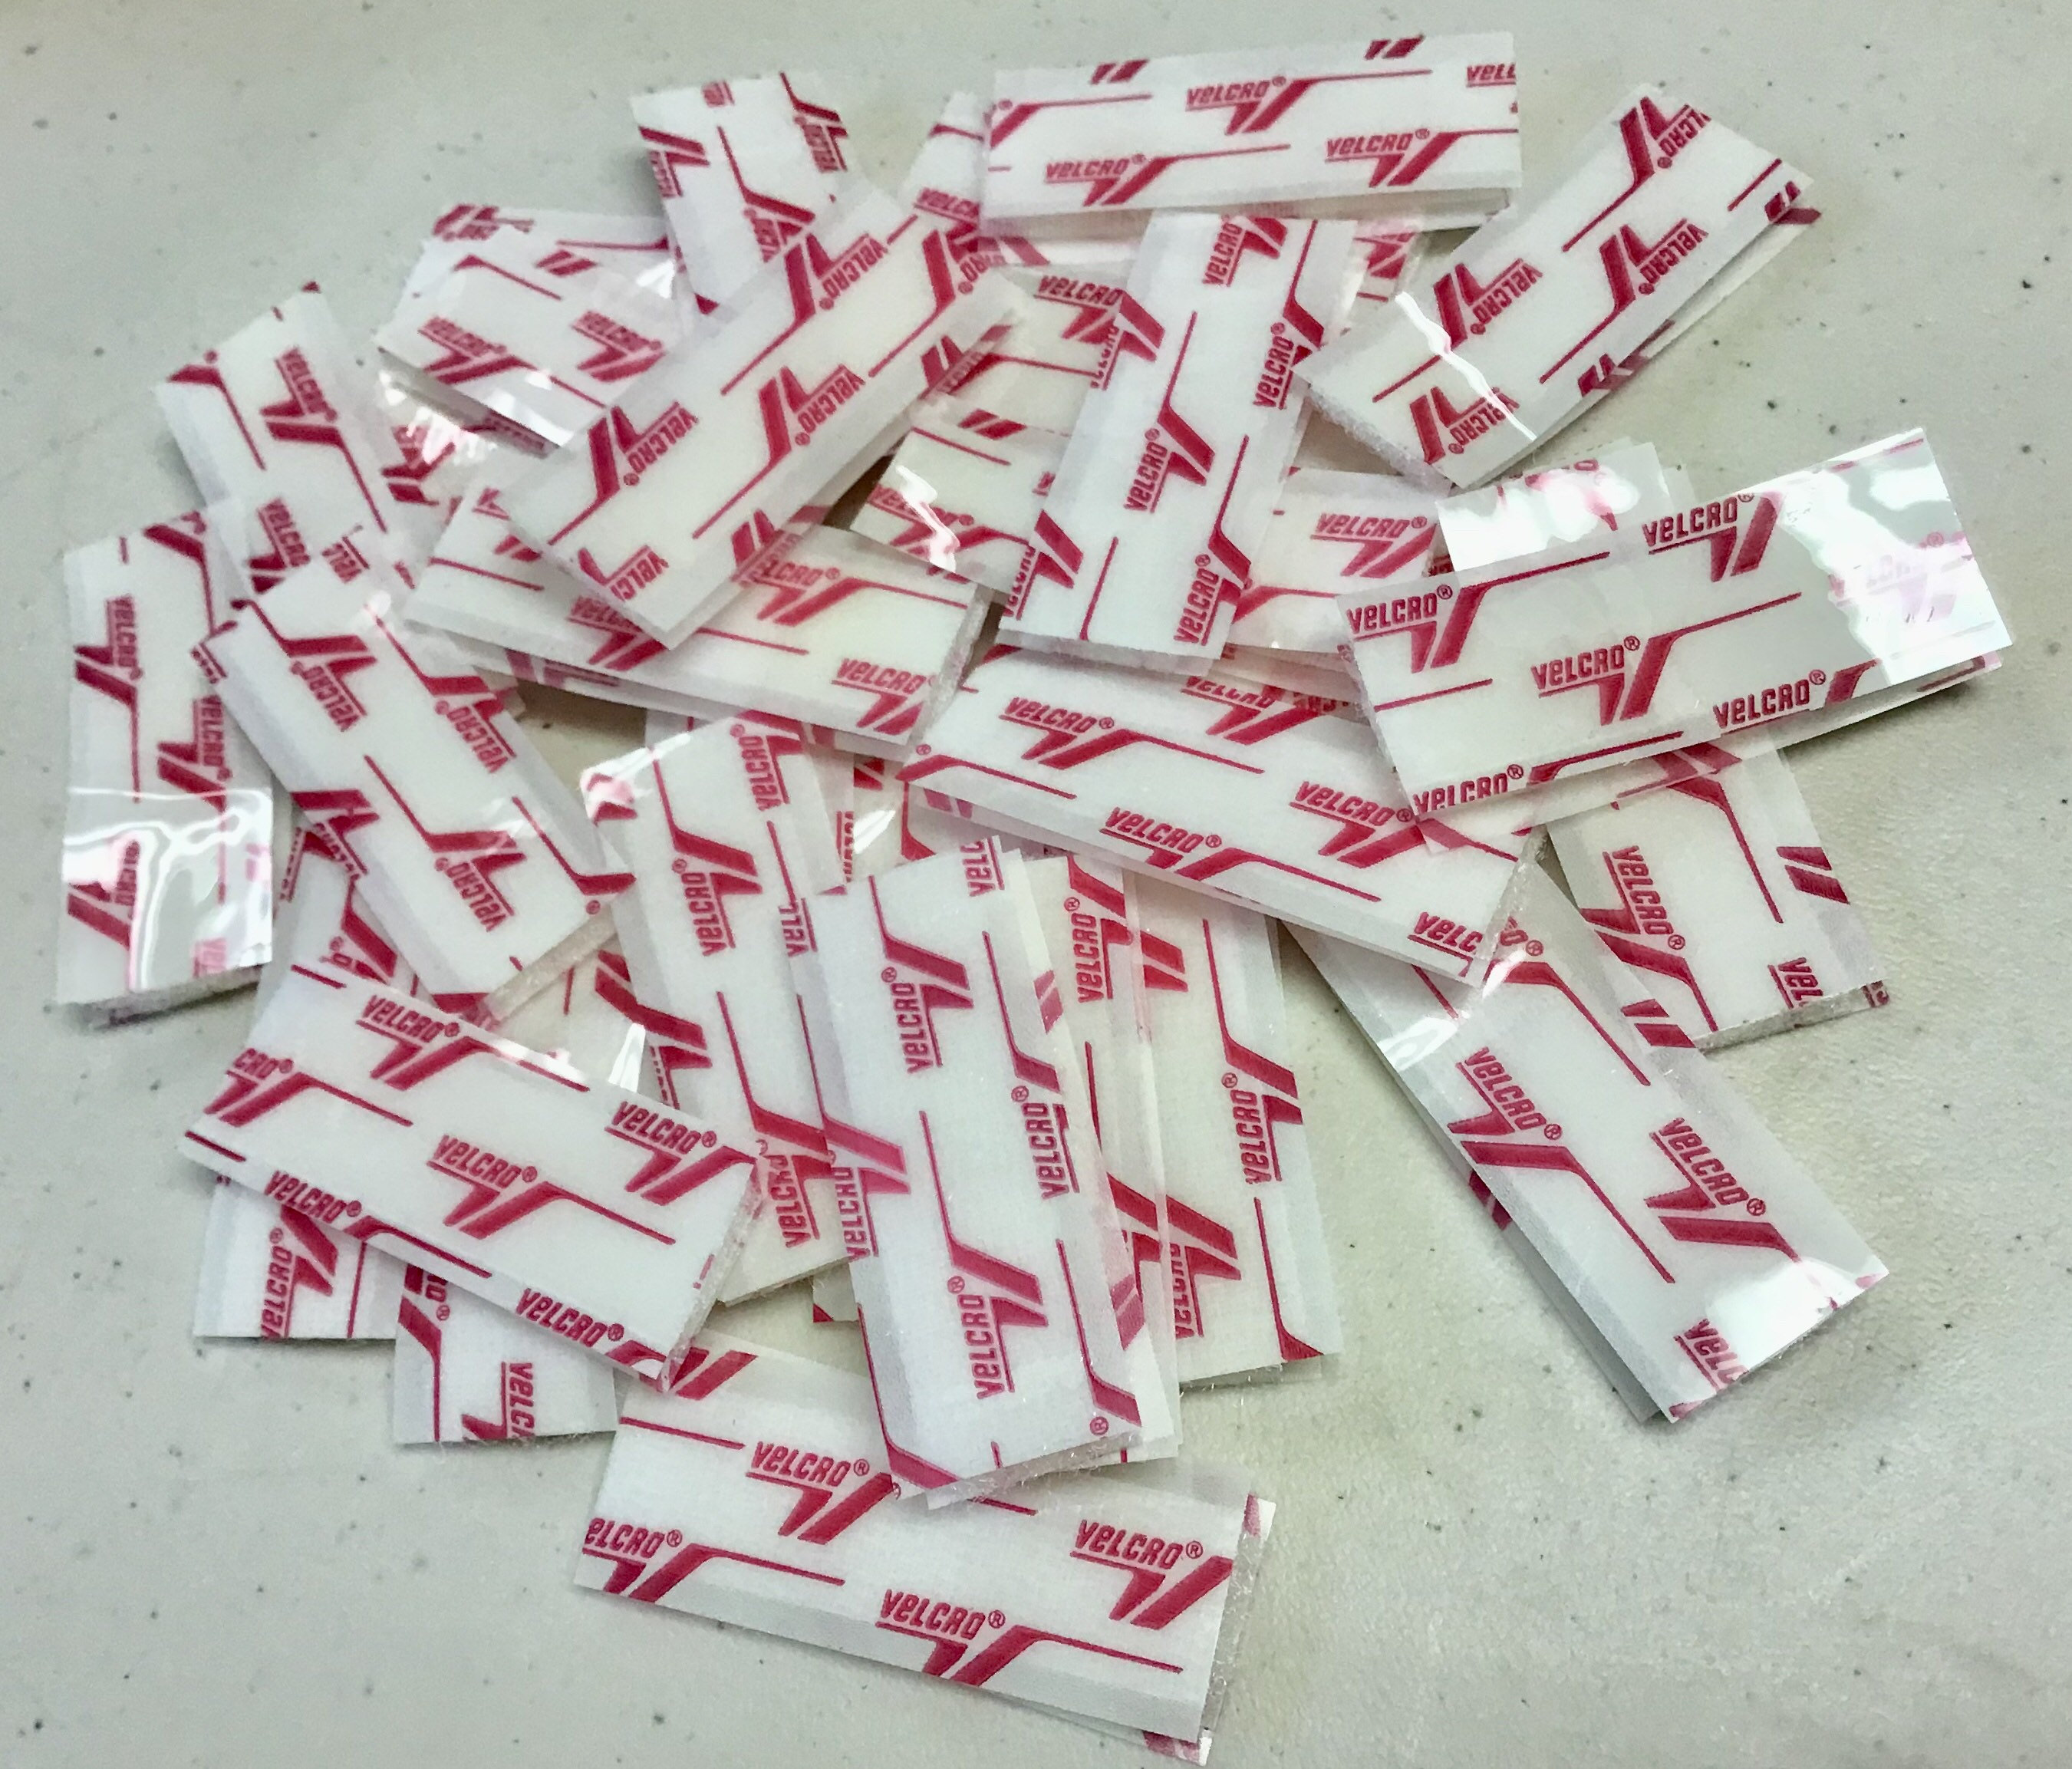 VELCRO Industrial Strength Adhesive Peel Stick Tape STRIPS 10